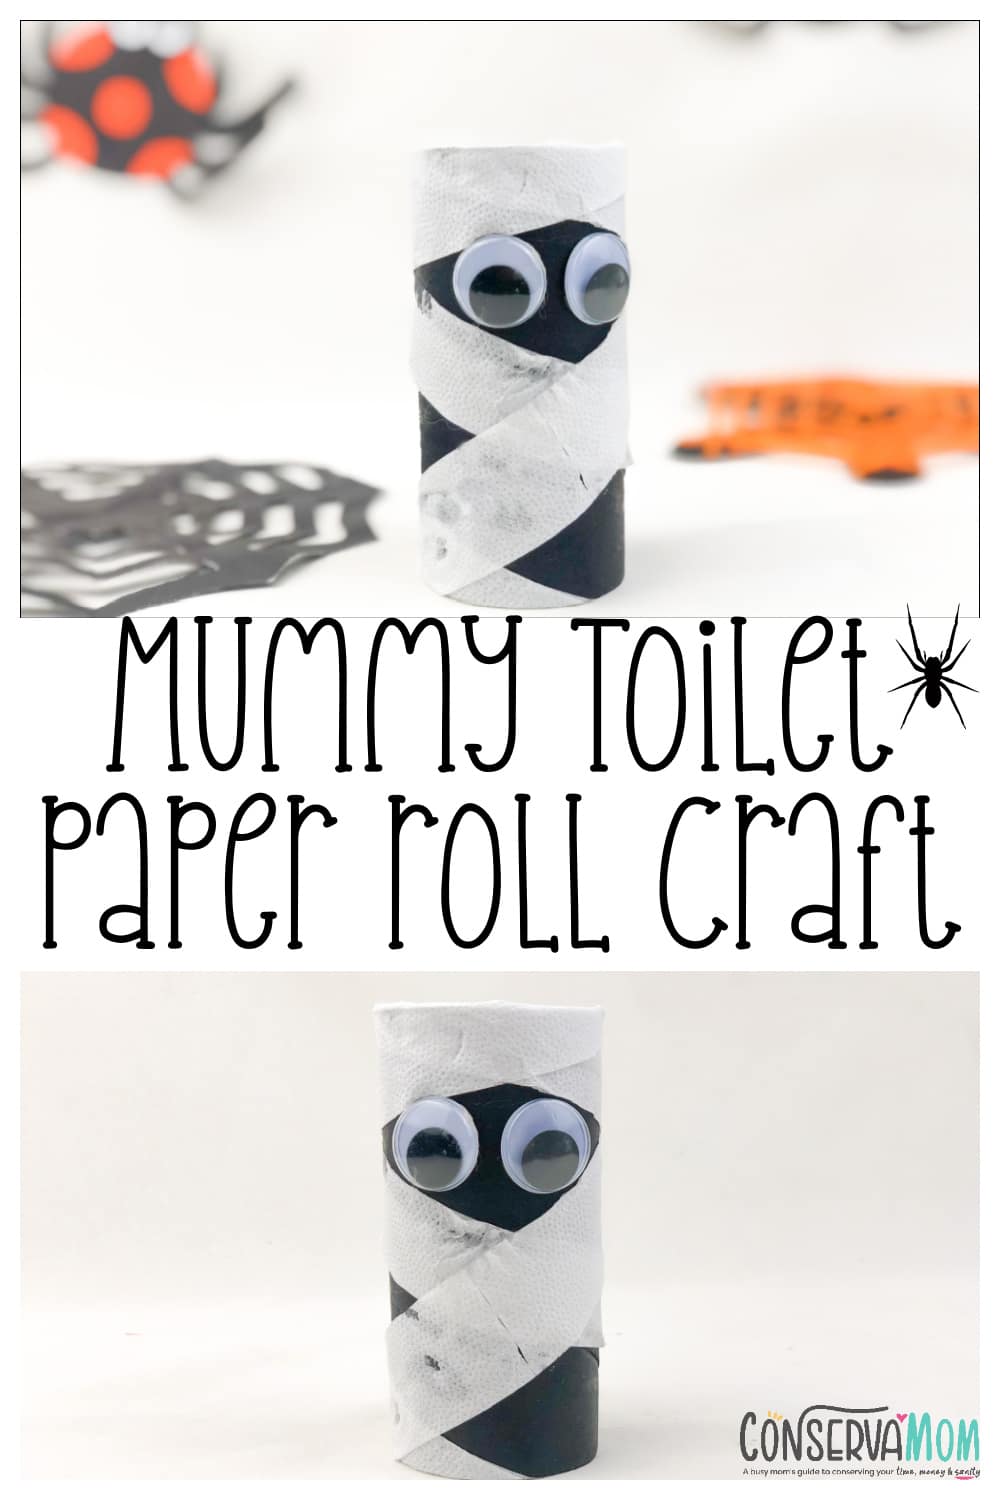 Mummy Toilet paper roll Craft